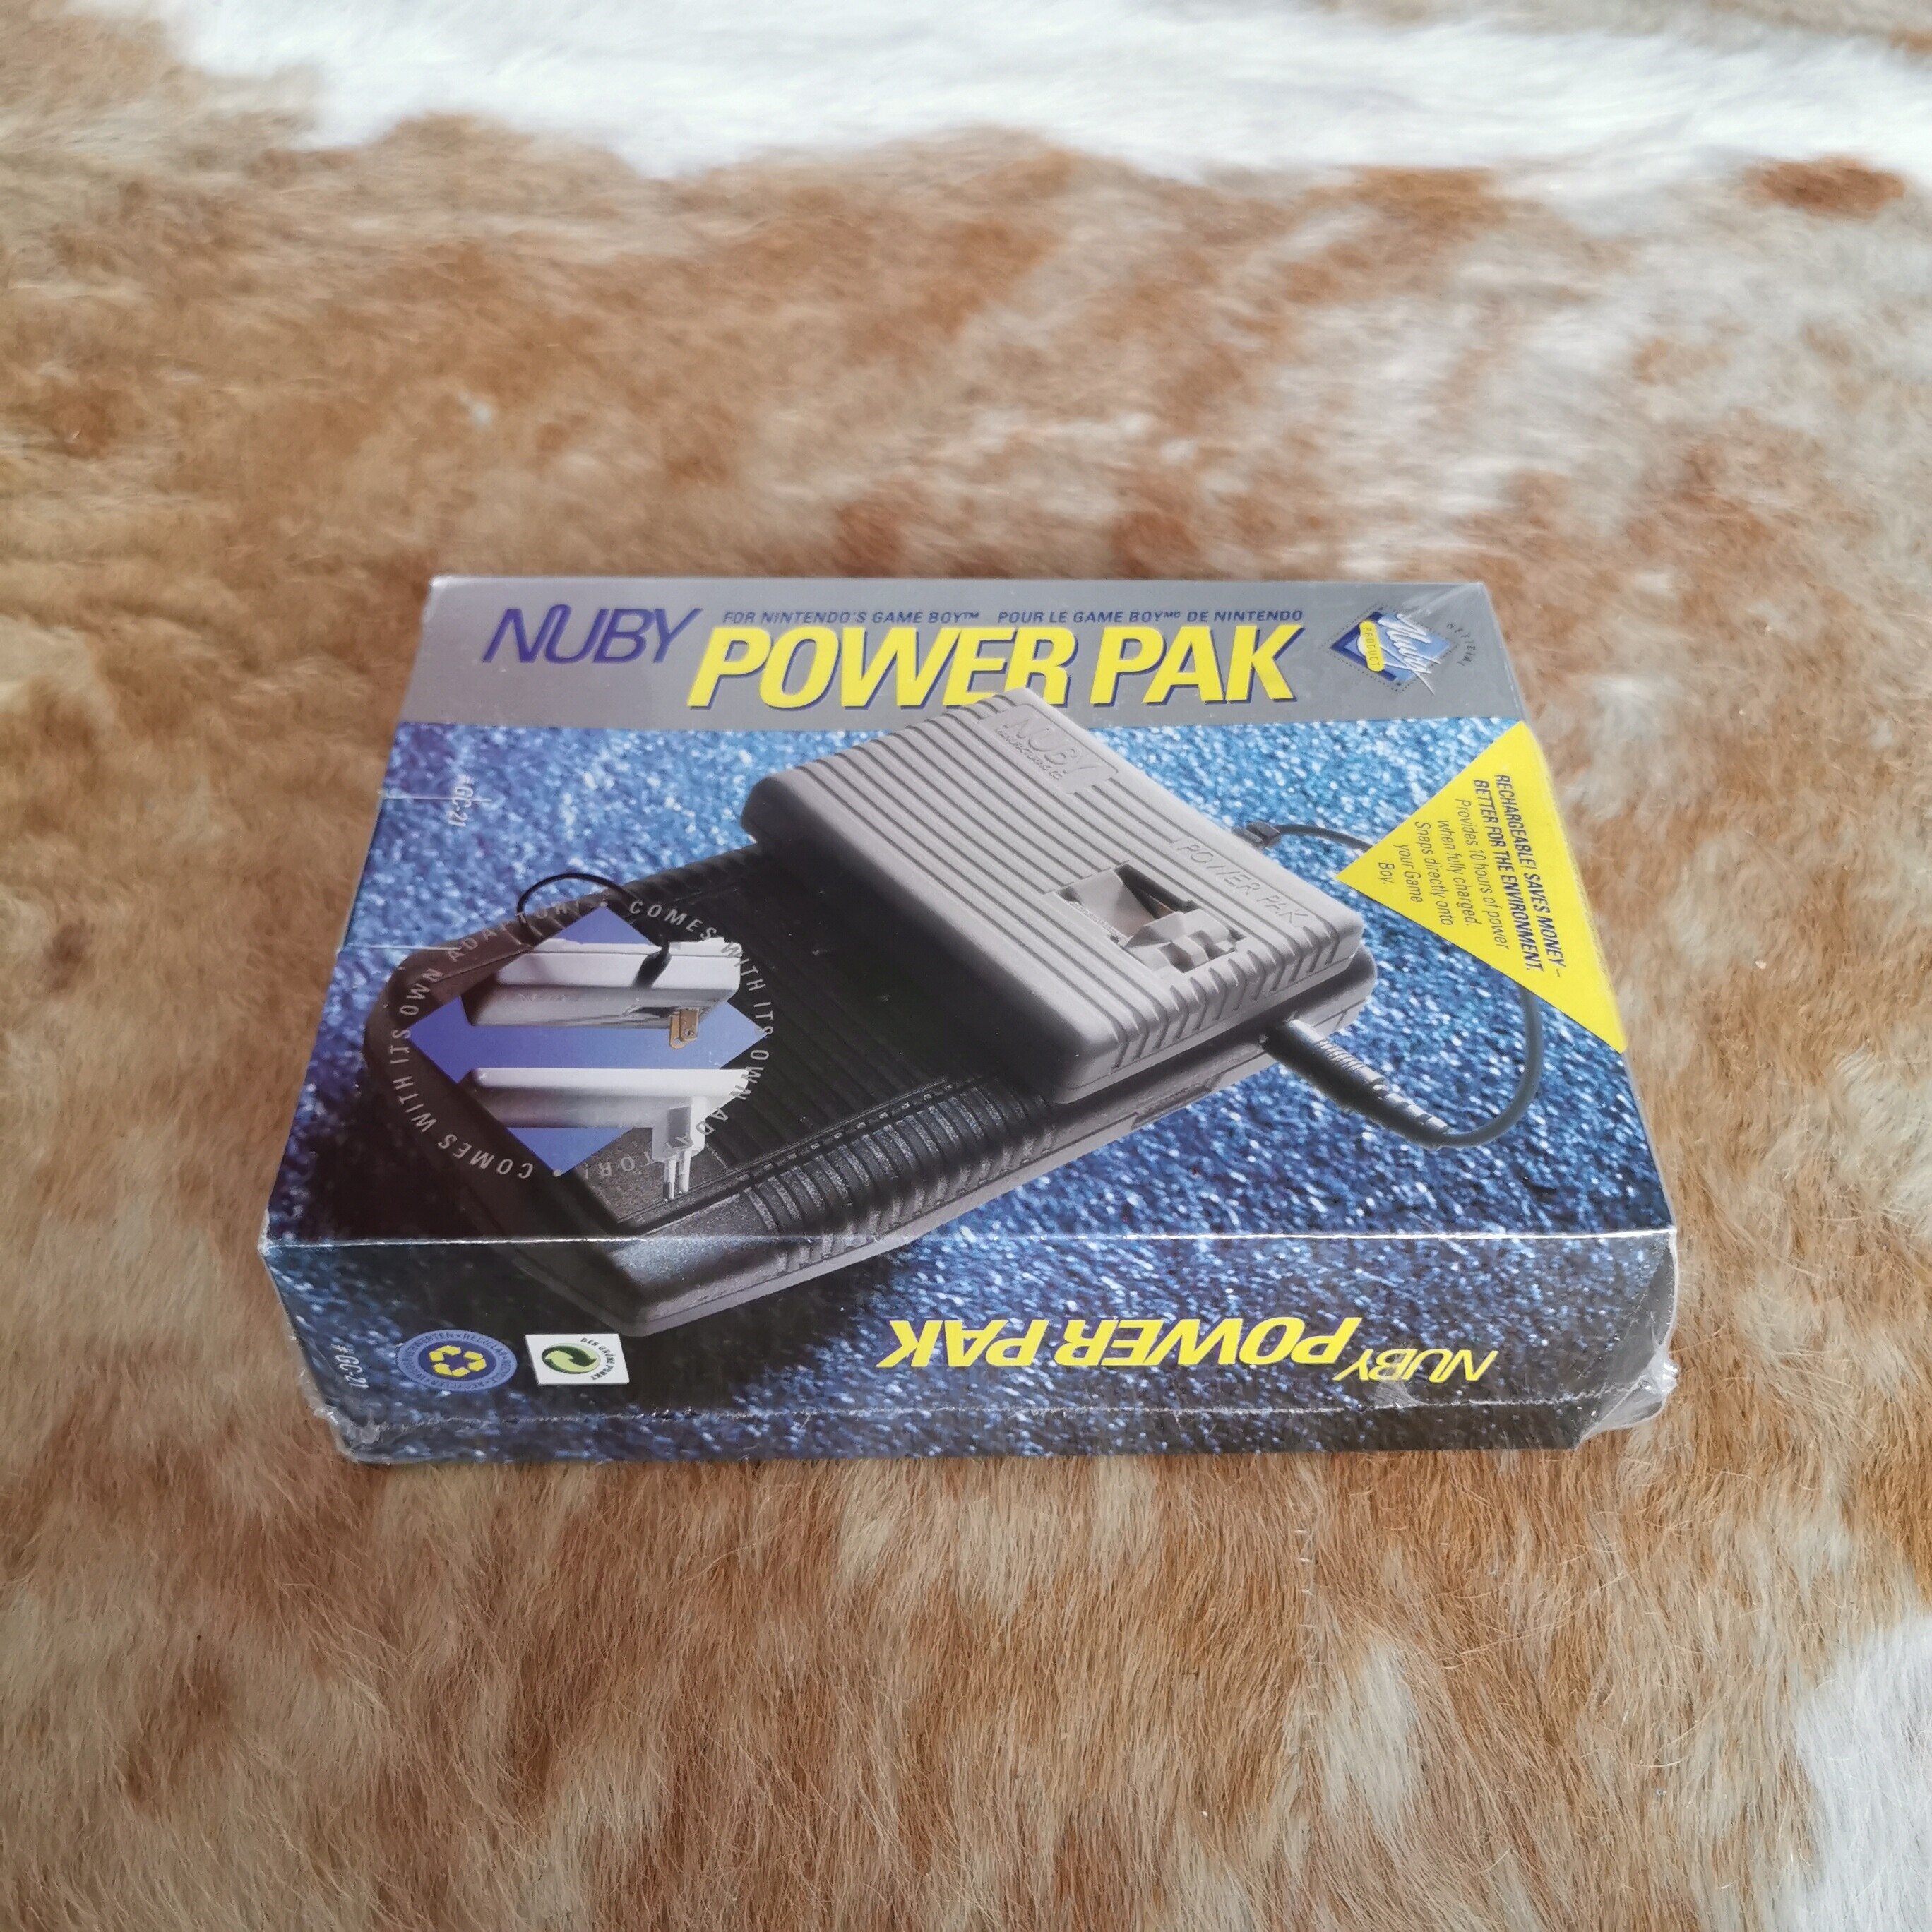  Nuby Game Boy Power Pak